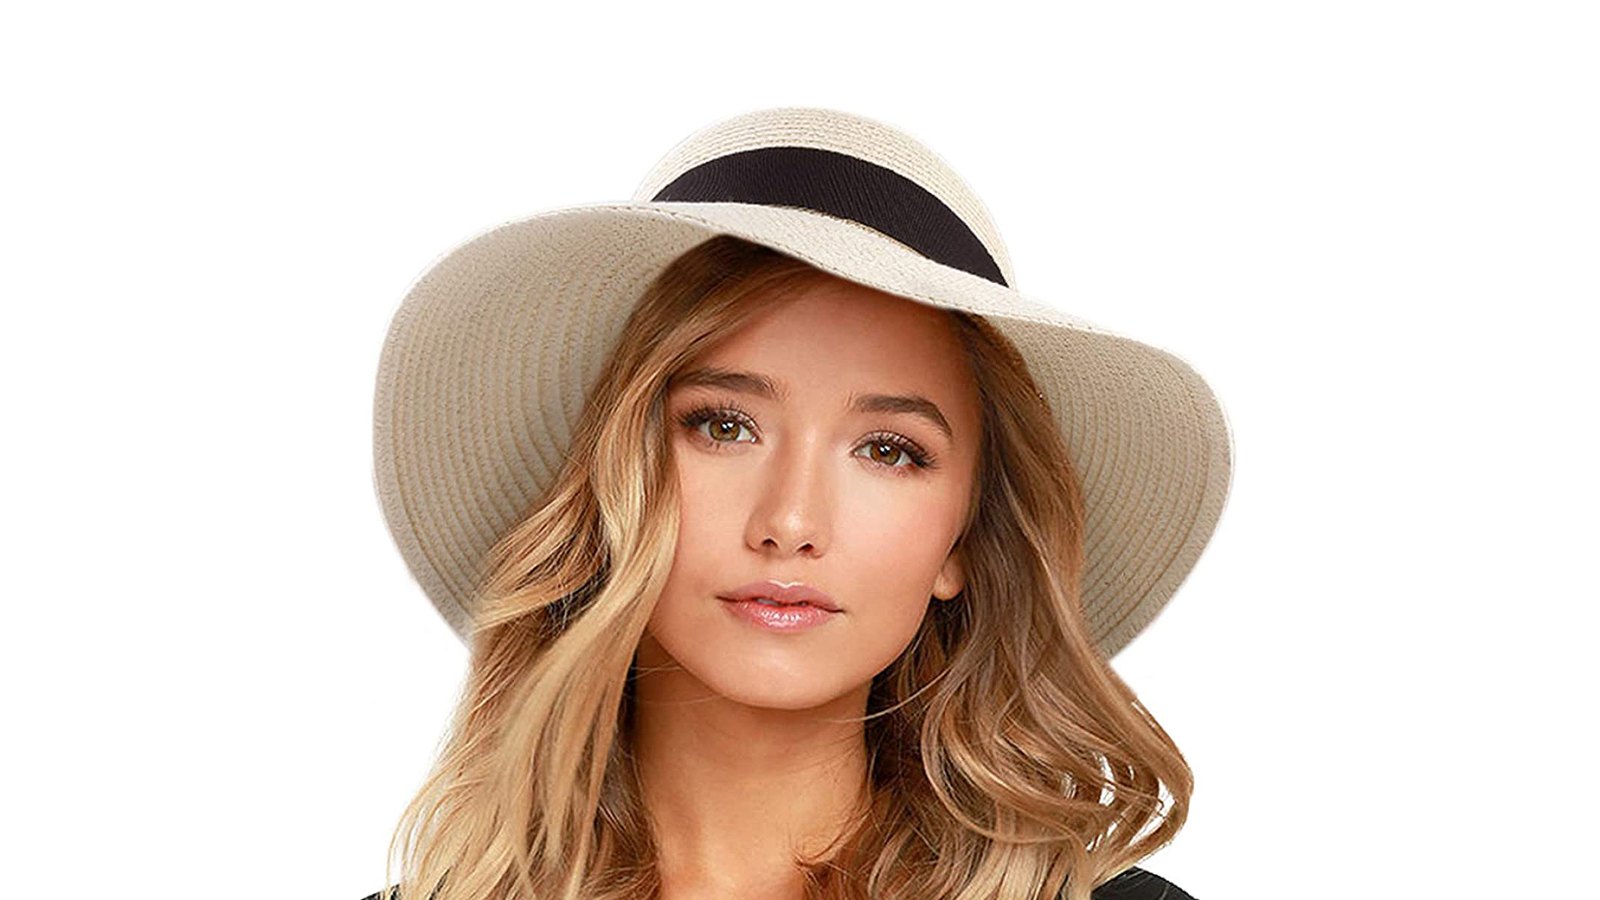 FURTALK Beach Sun Straw Hat